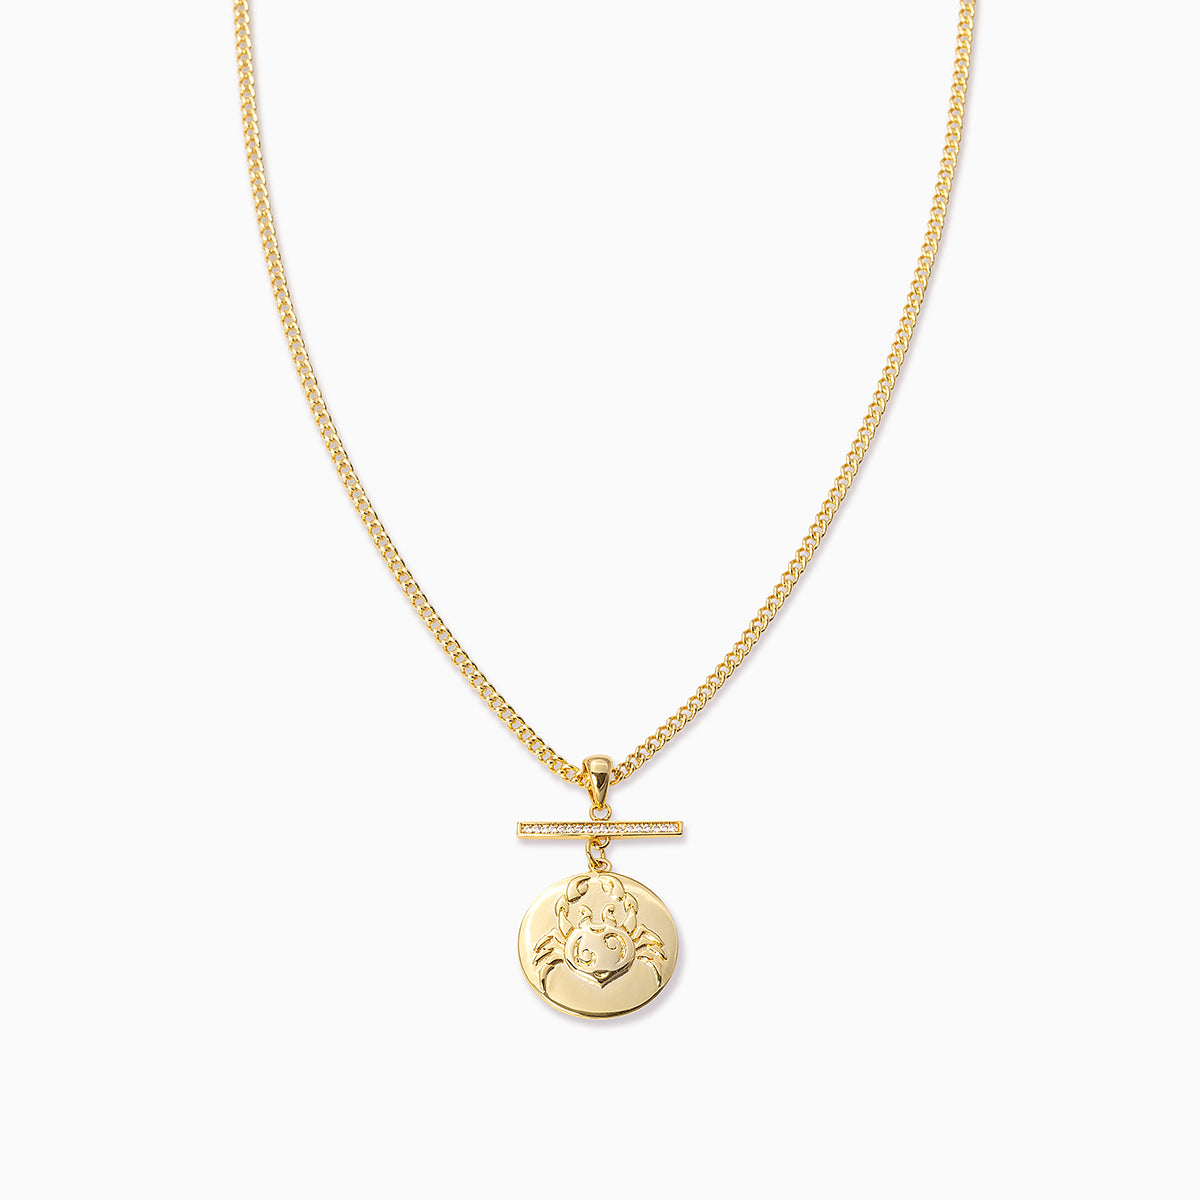 Zodiac Pendant Necklace | Cancer | Product Image | Uncommon James